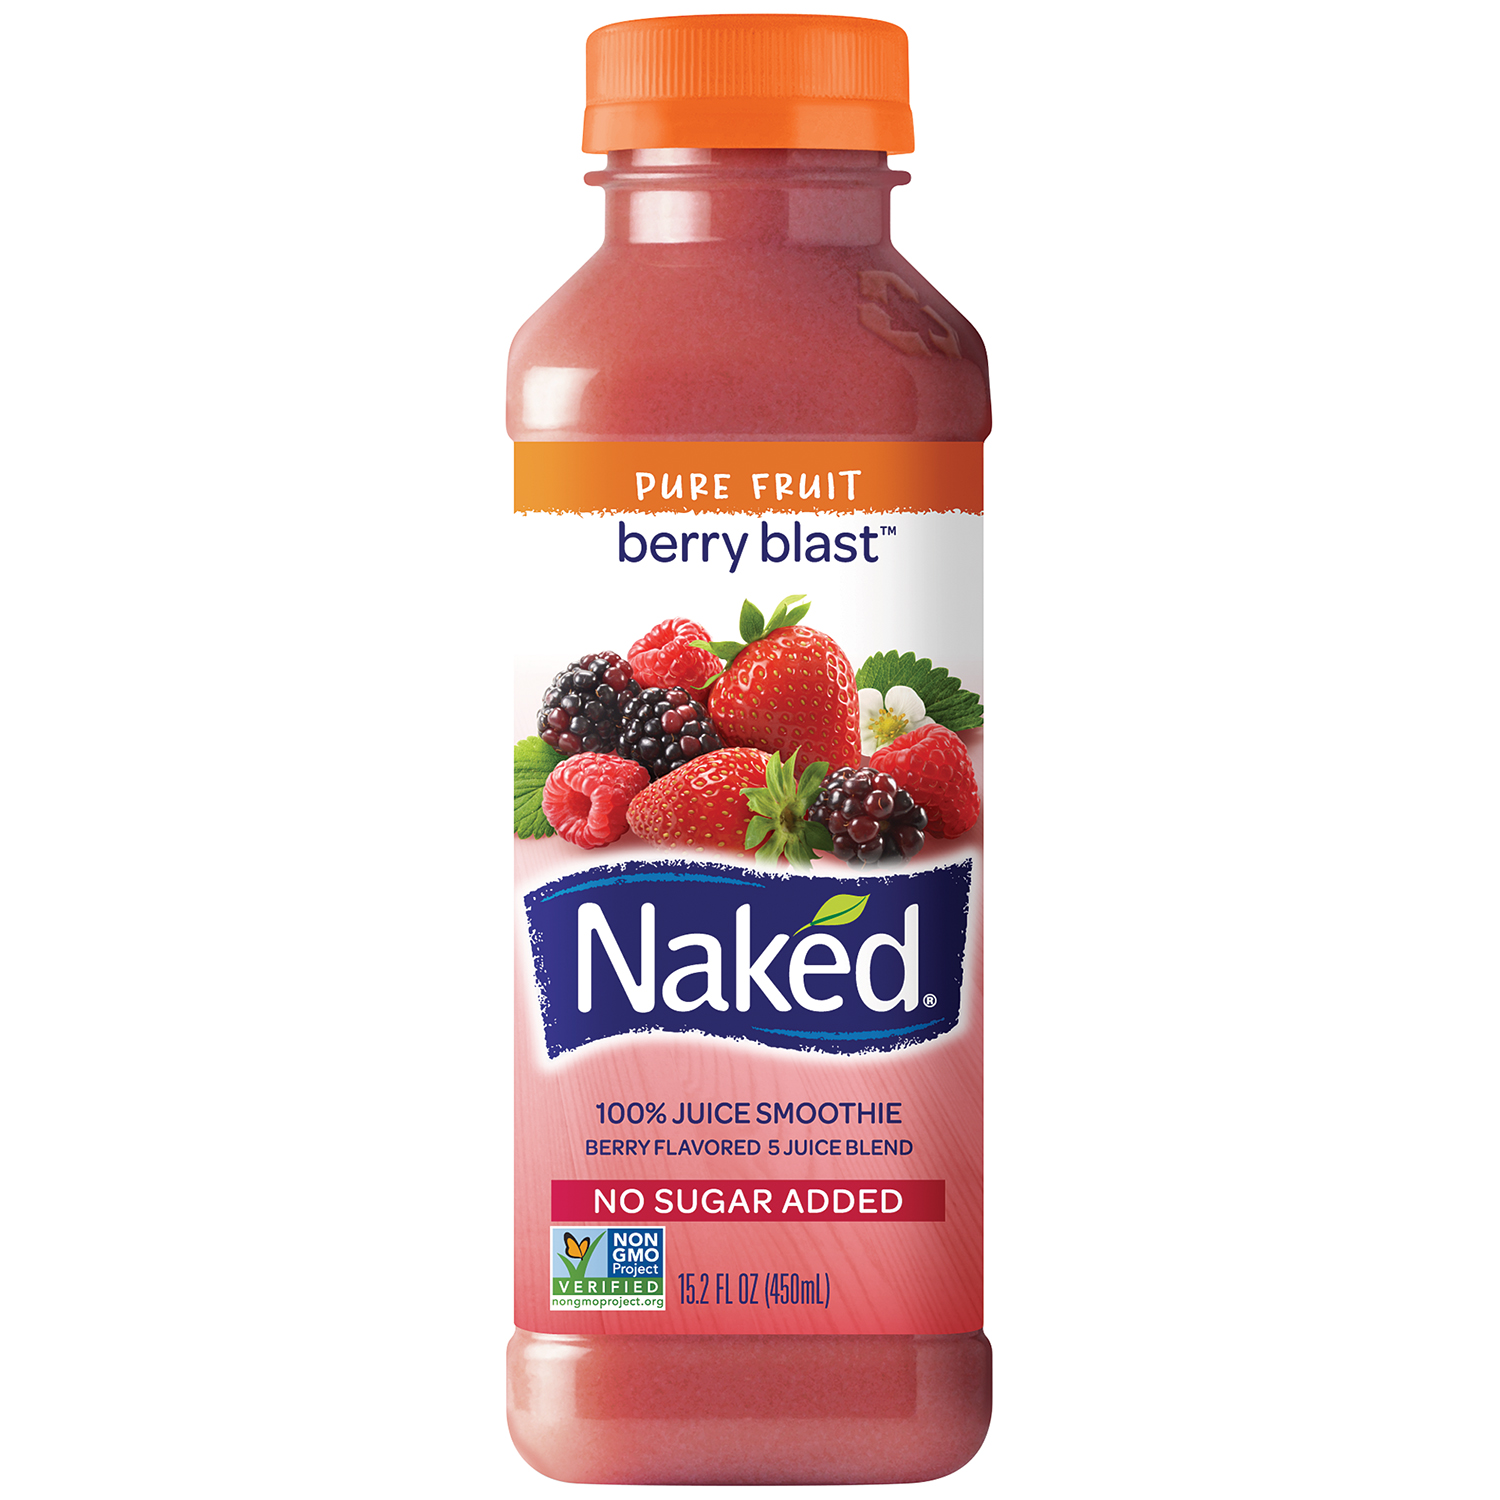 Naked Berry Blast Juice Smoothie (64 fl oz) from BJs Wholesale Club - Instacart